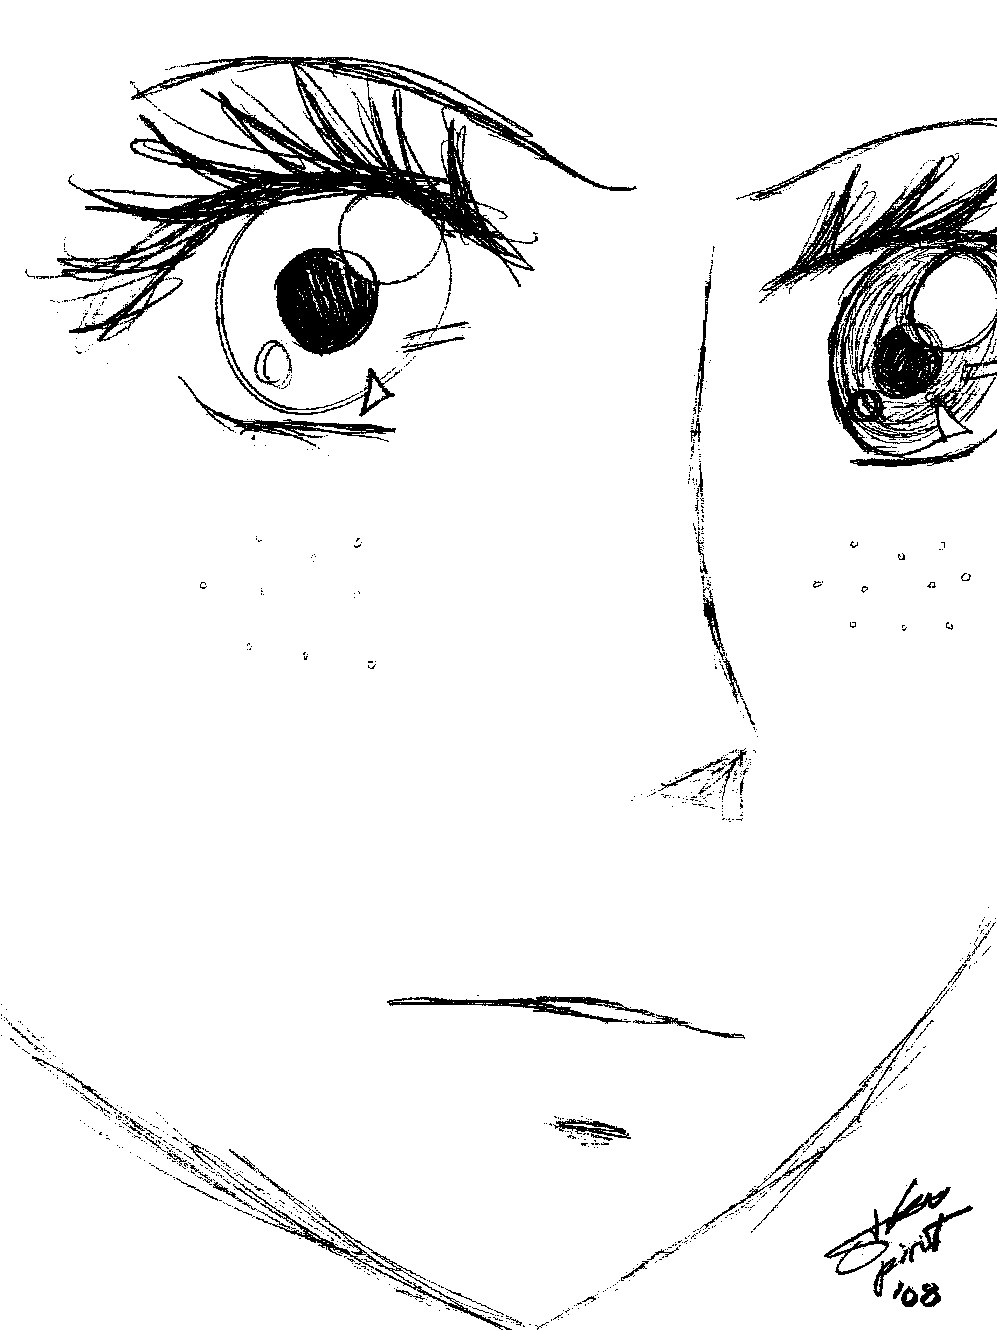 Abi's Face by Otaku_Spirit